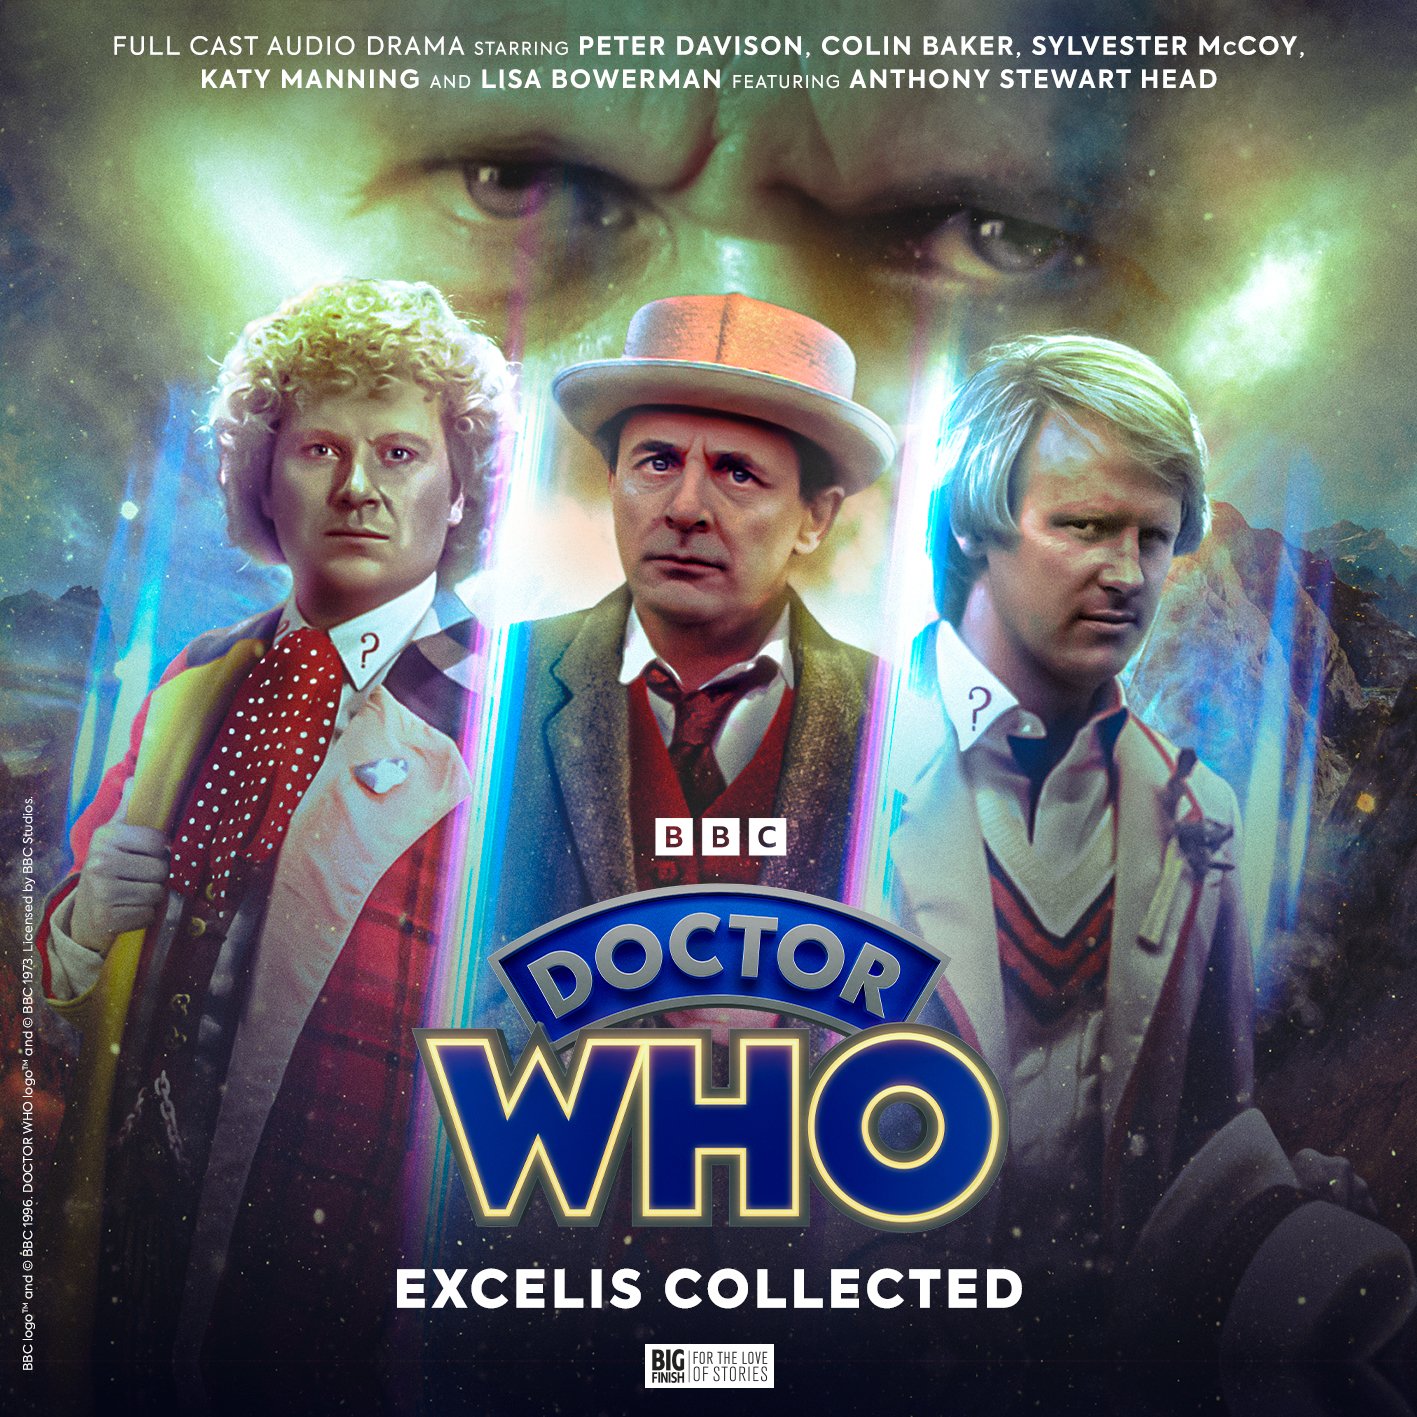 Big Finish Rereleases the Doctor Who Excelis Saga as a Special Boxset